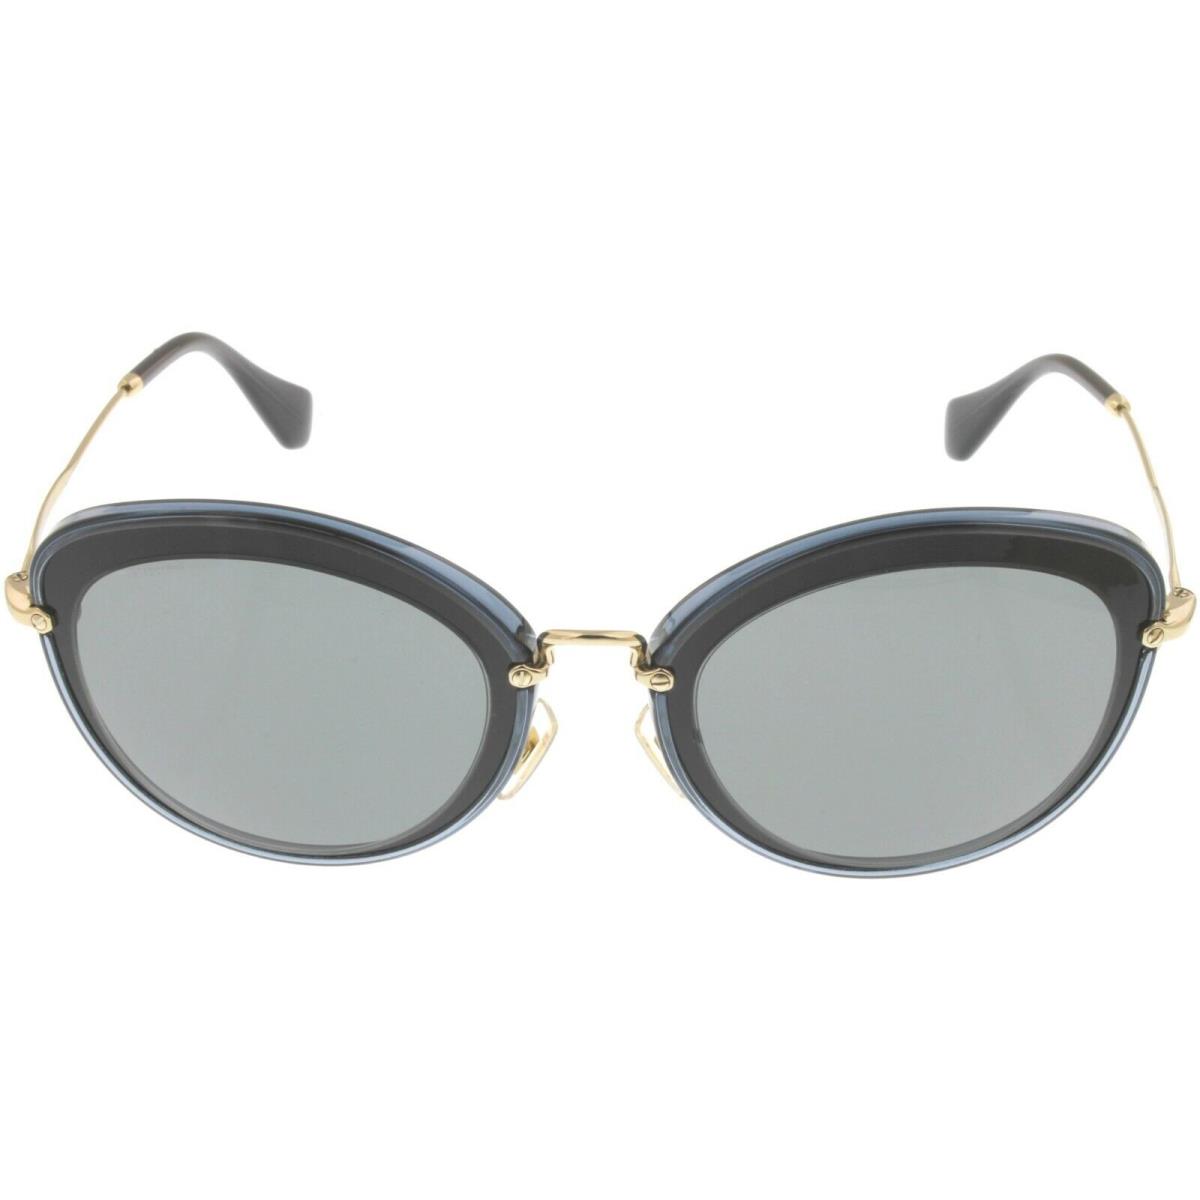 Sunglasses Women Black Gold Cat Eye Miu Miu 50R 1AB 9K1